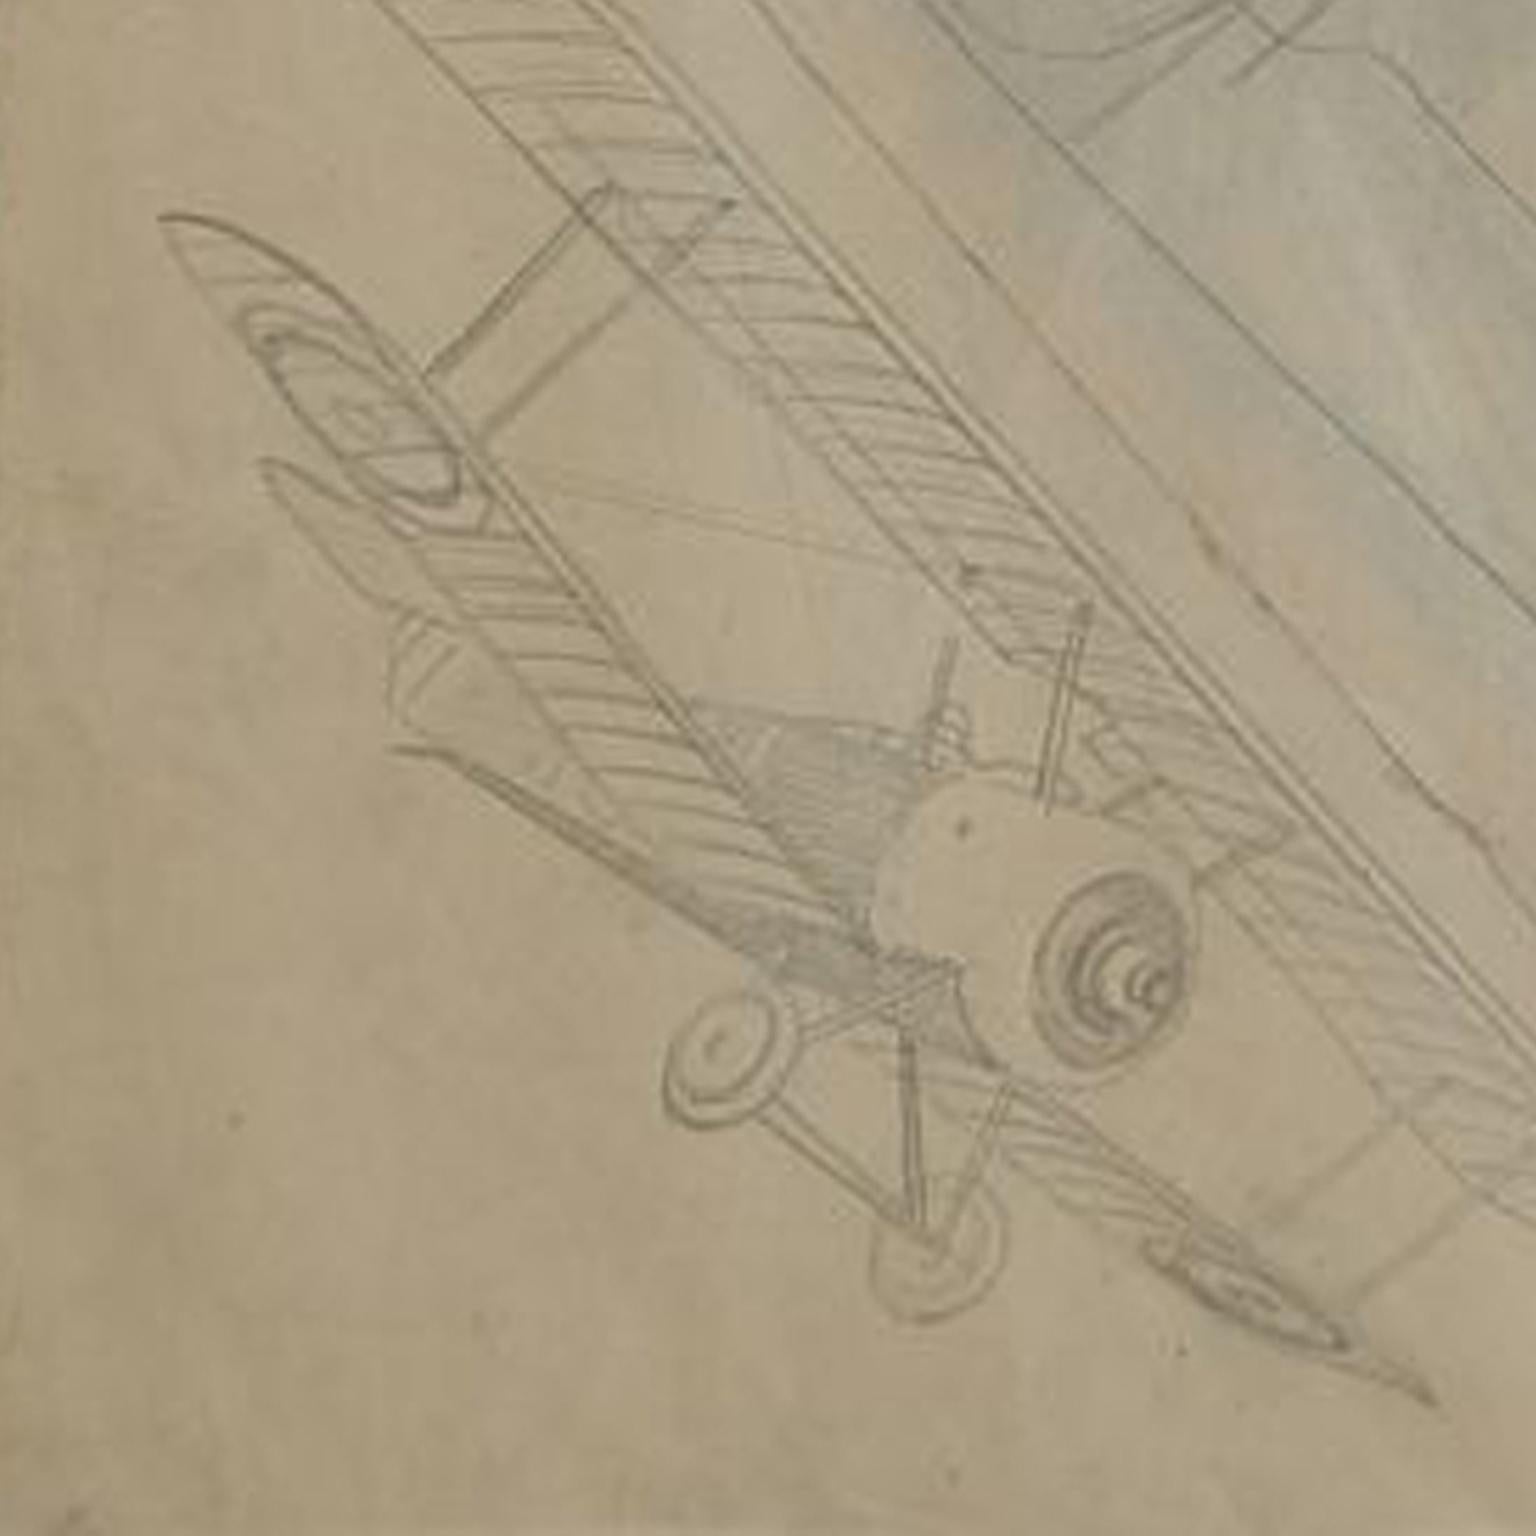 Italian Drawing Representing Three Different Biplanes Aircraft WWI by Riccardo Cavigioli For Sale